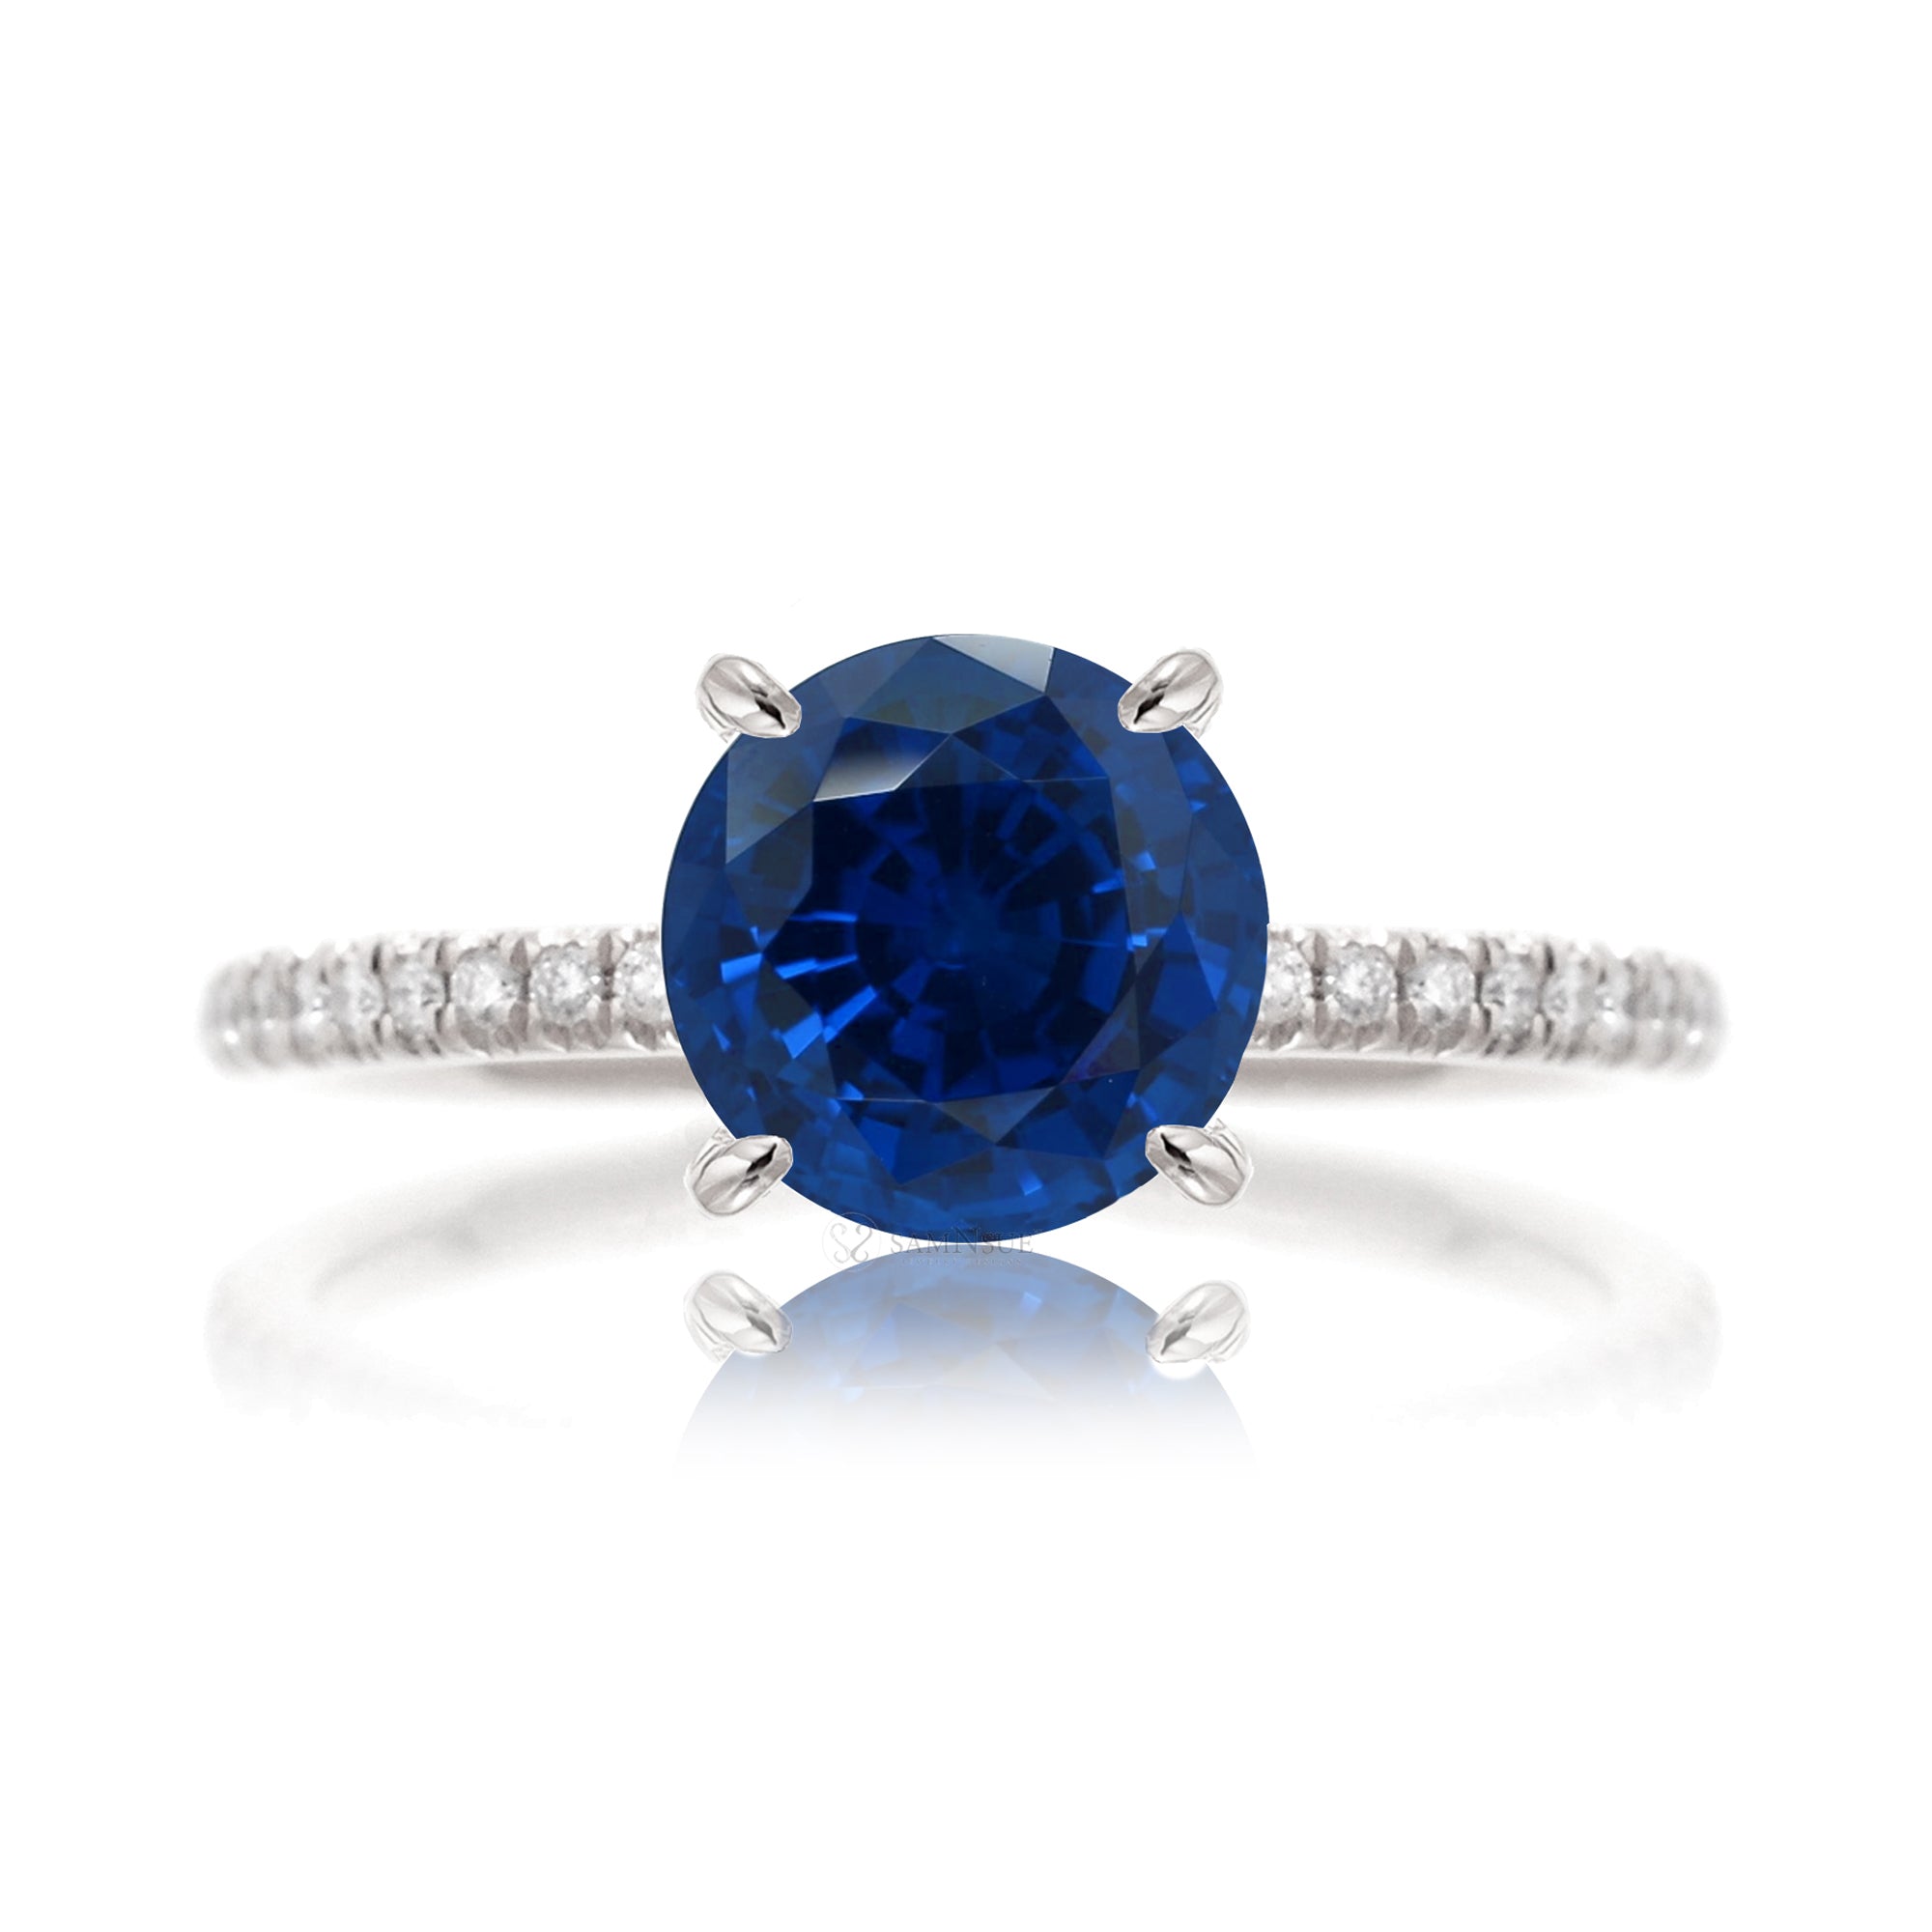 Round blue sapphire diamond band engagement ring white gold - the Ava